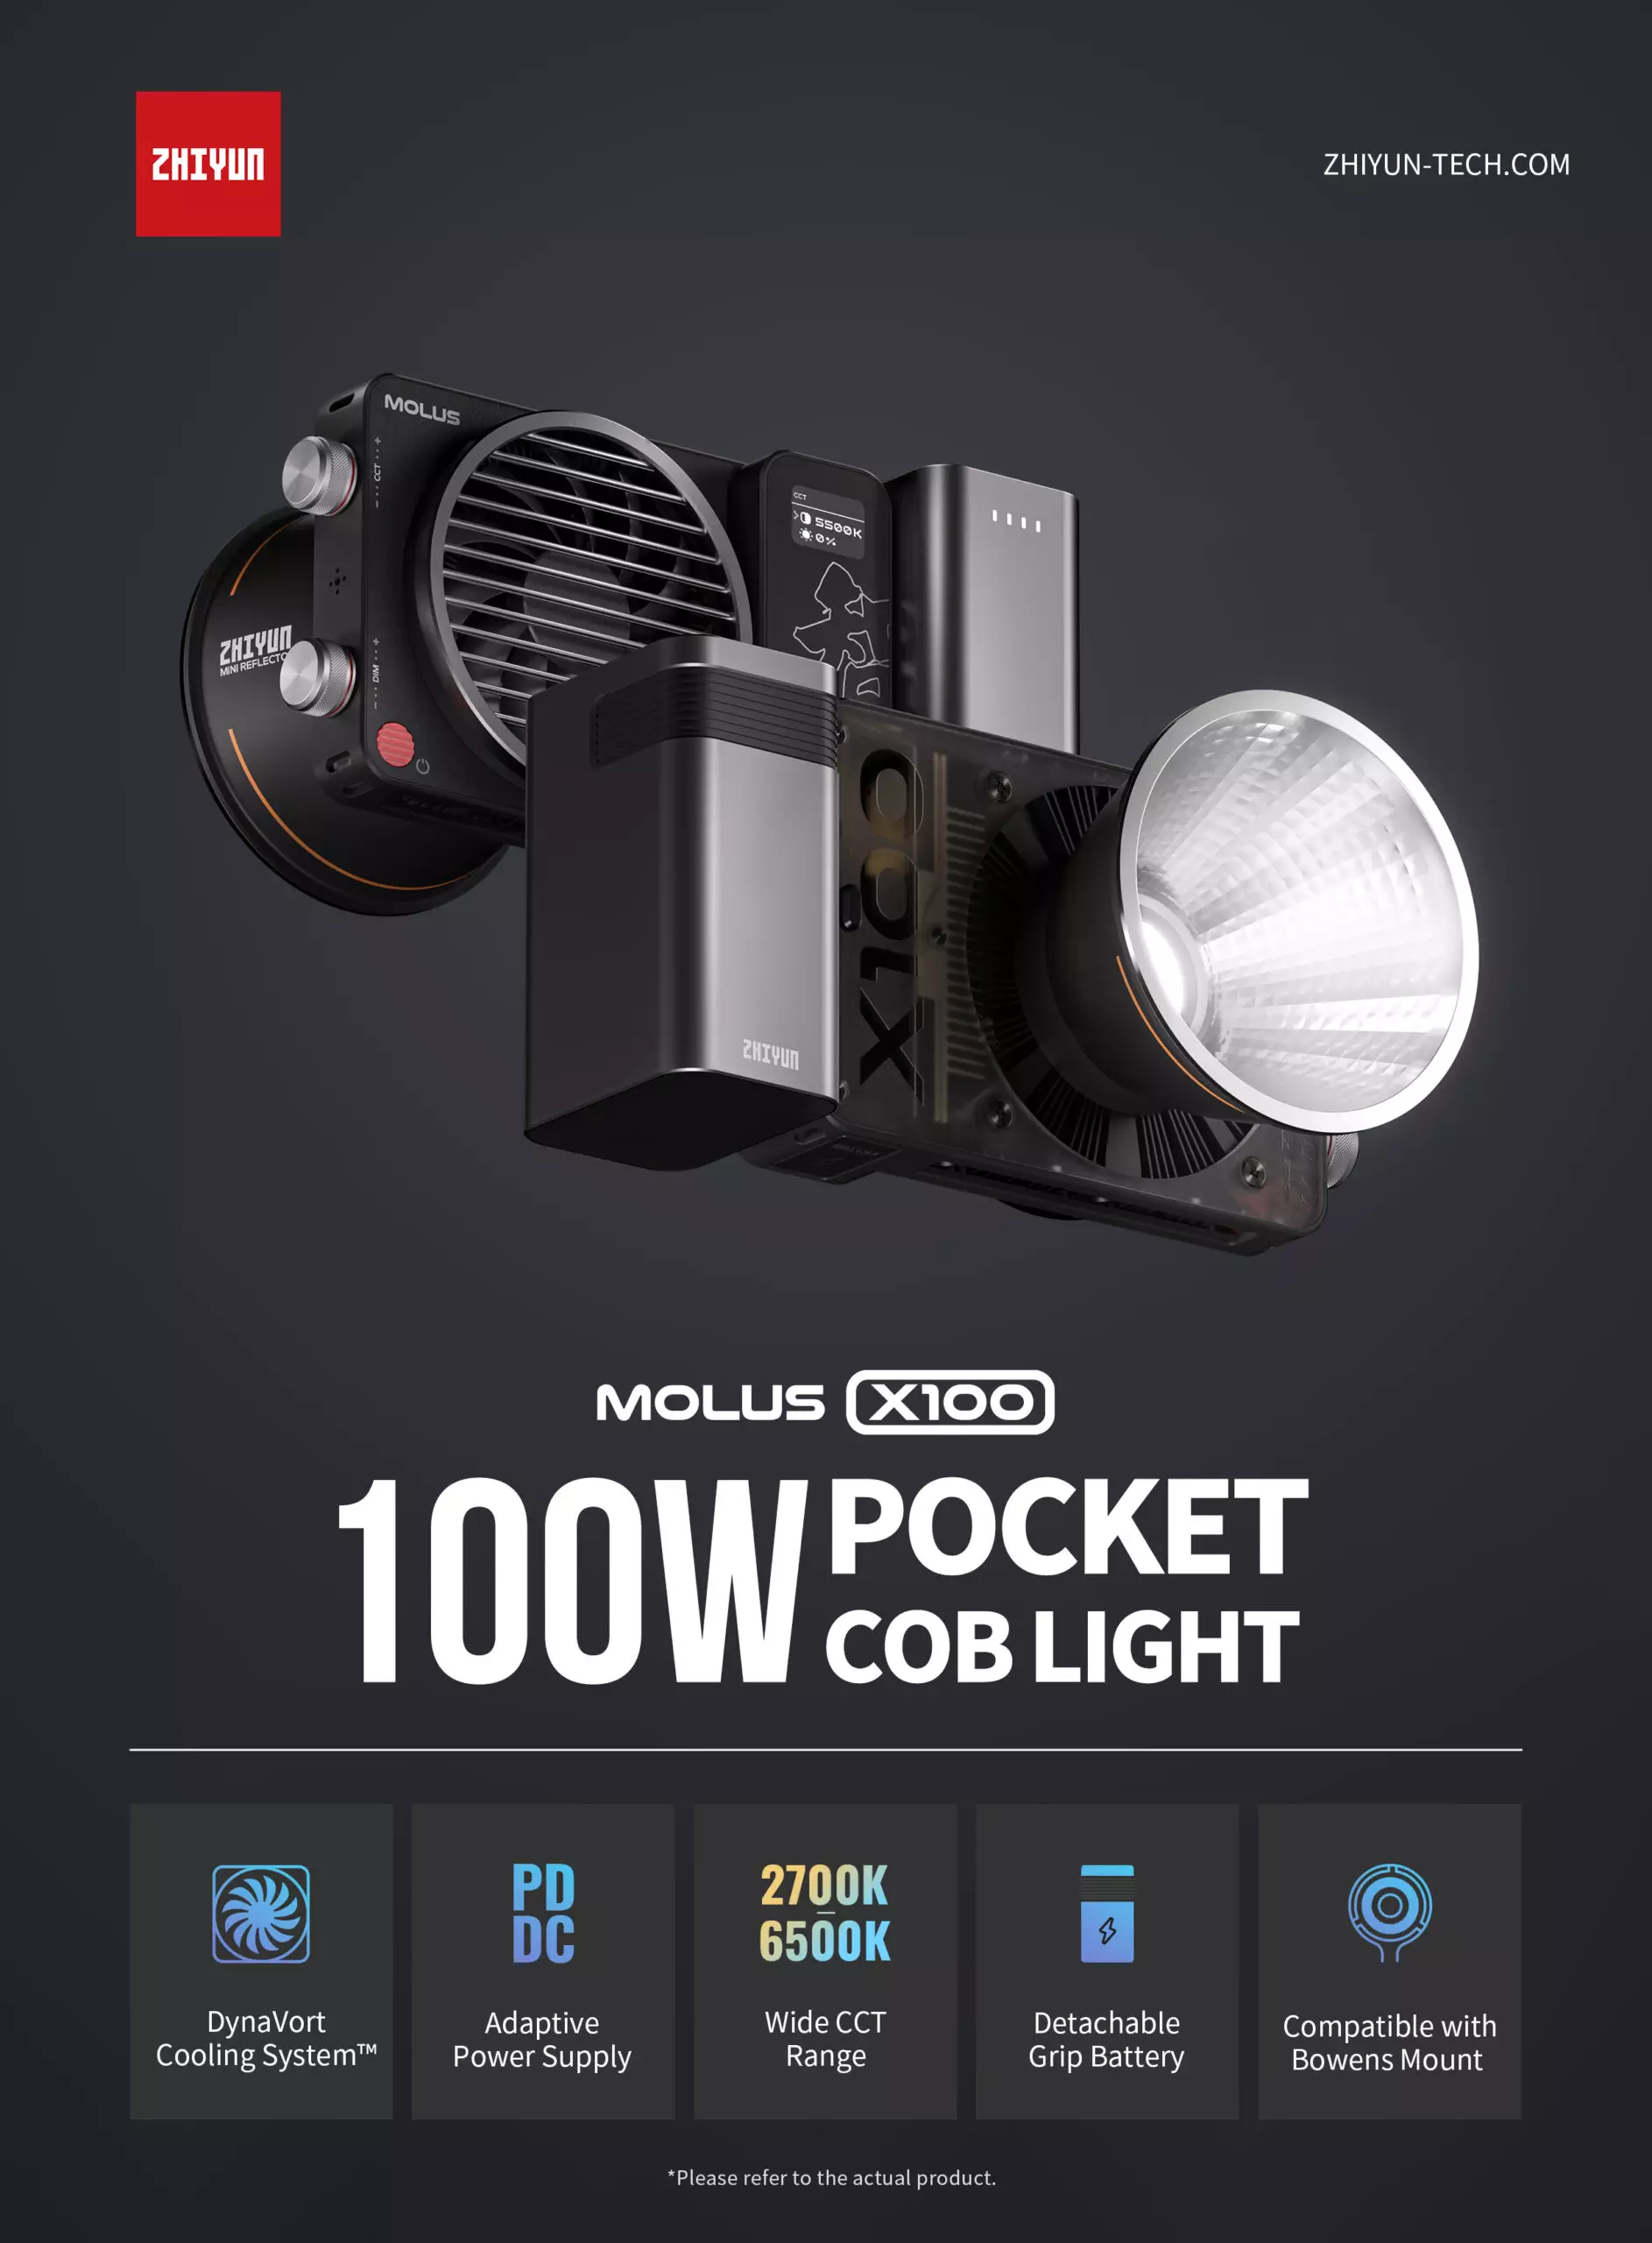 Zhiyun Molus X100 Pocket COB 100W Lights